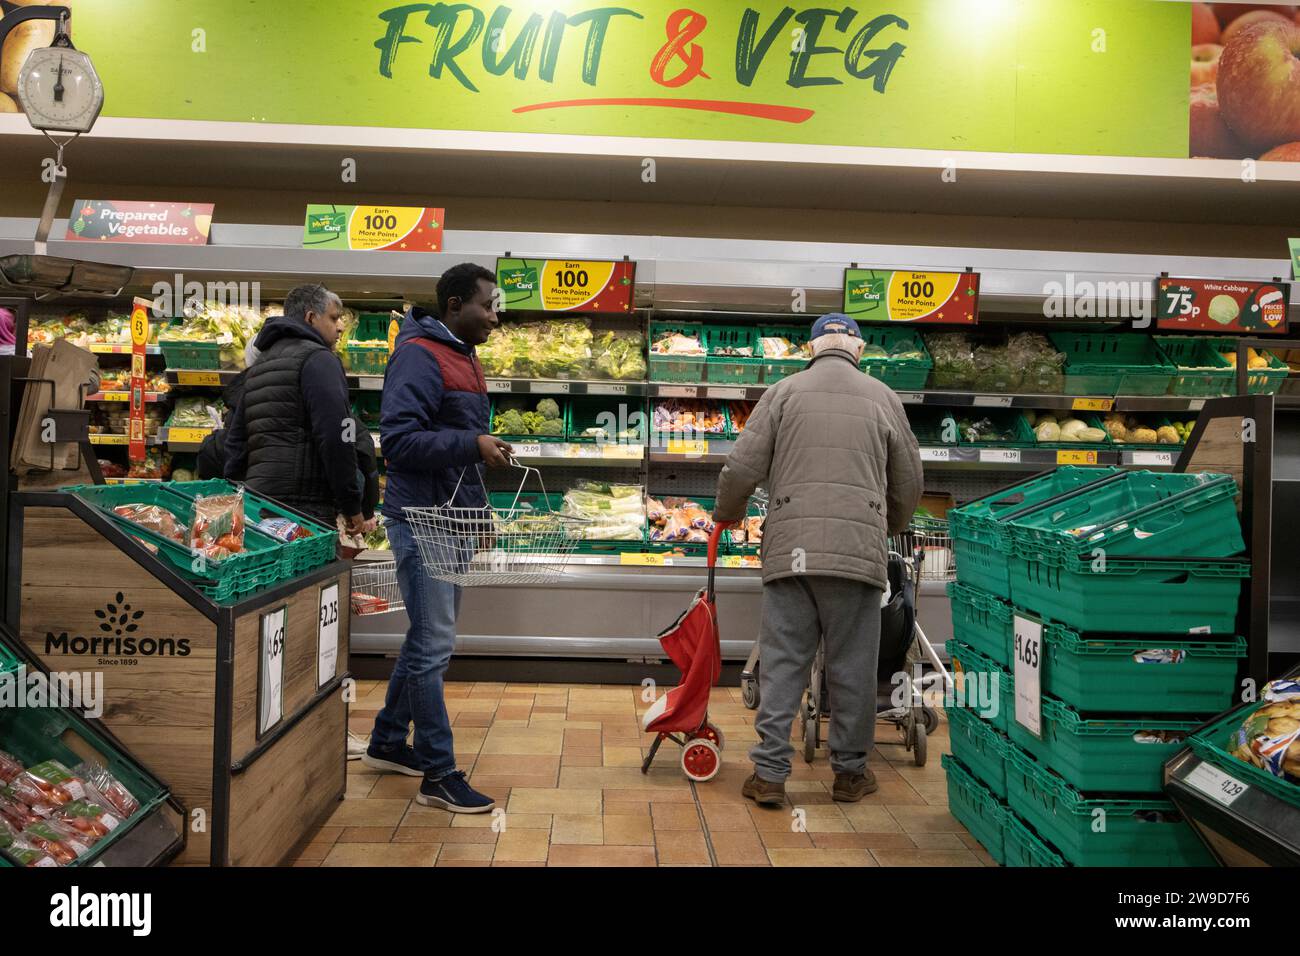 https://c8.alamy.com/comp/2W9D7F6/shoppers-at-a-fruit-veg-aisle-inside-a-morrisons-supermarket-in-central-london-england-uk-2W9D7F6.jpg